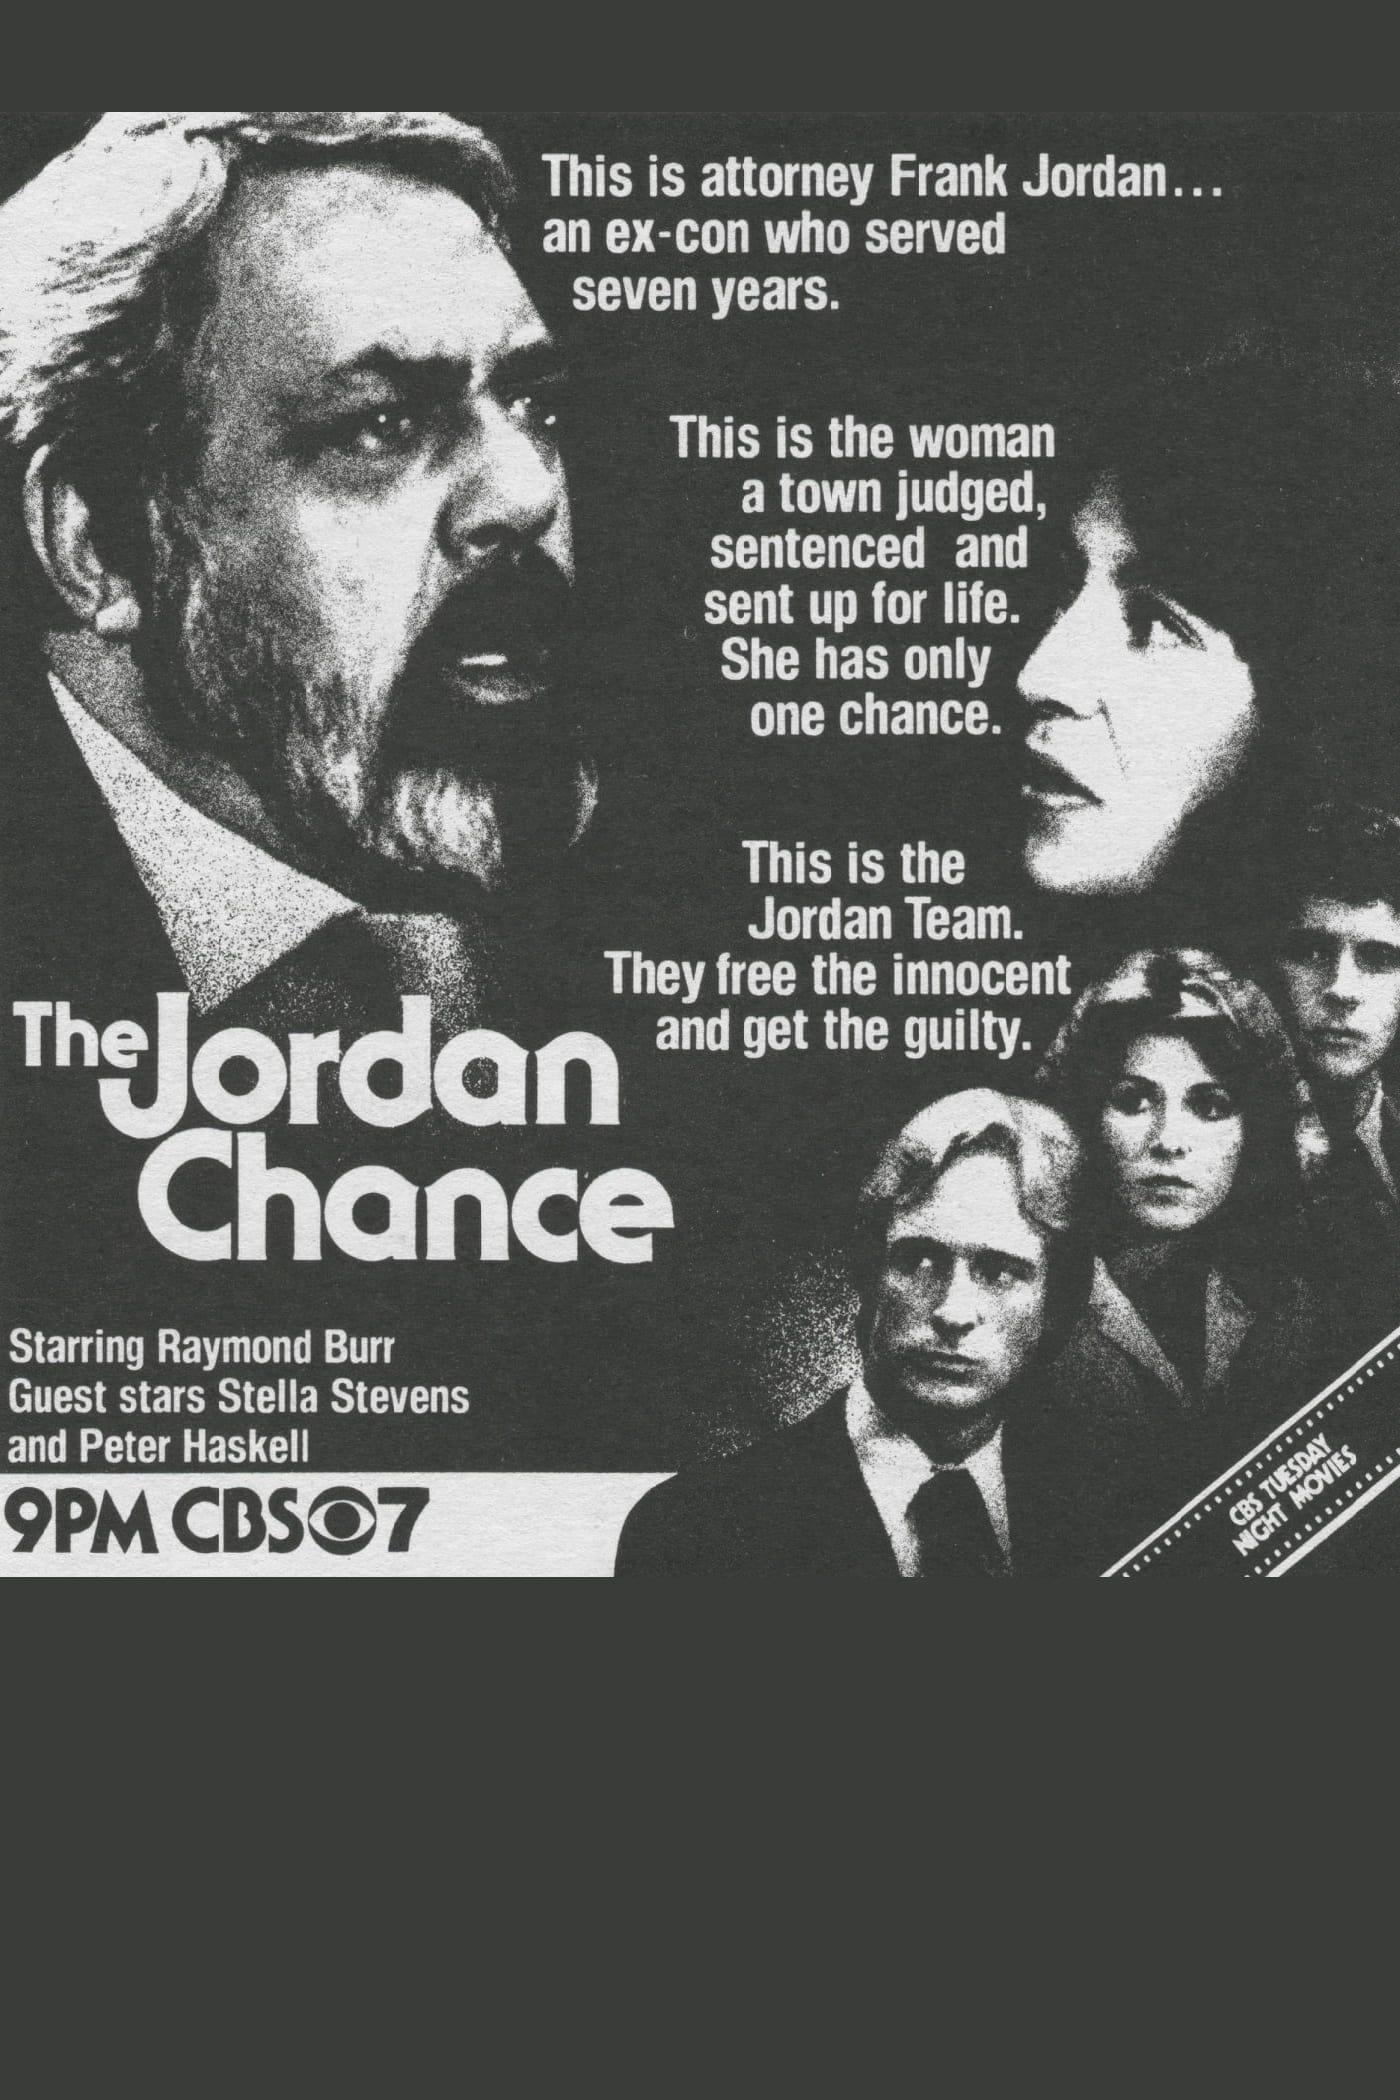 The Jordan Chance poster